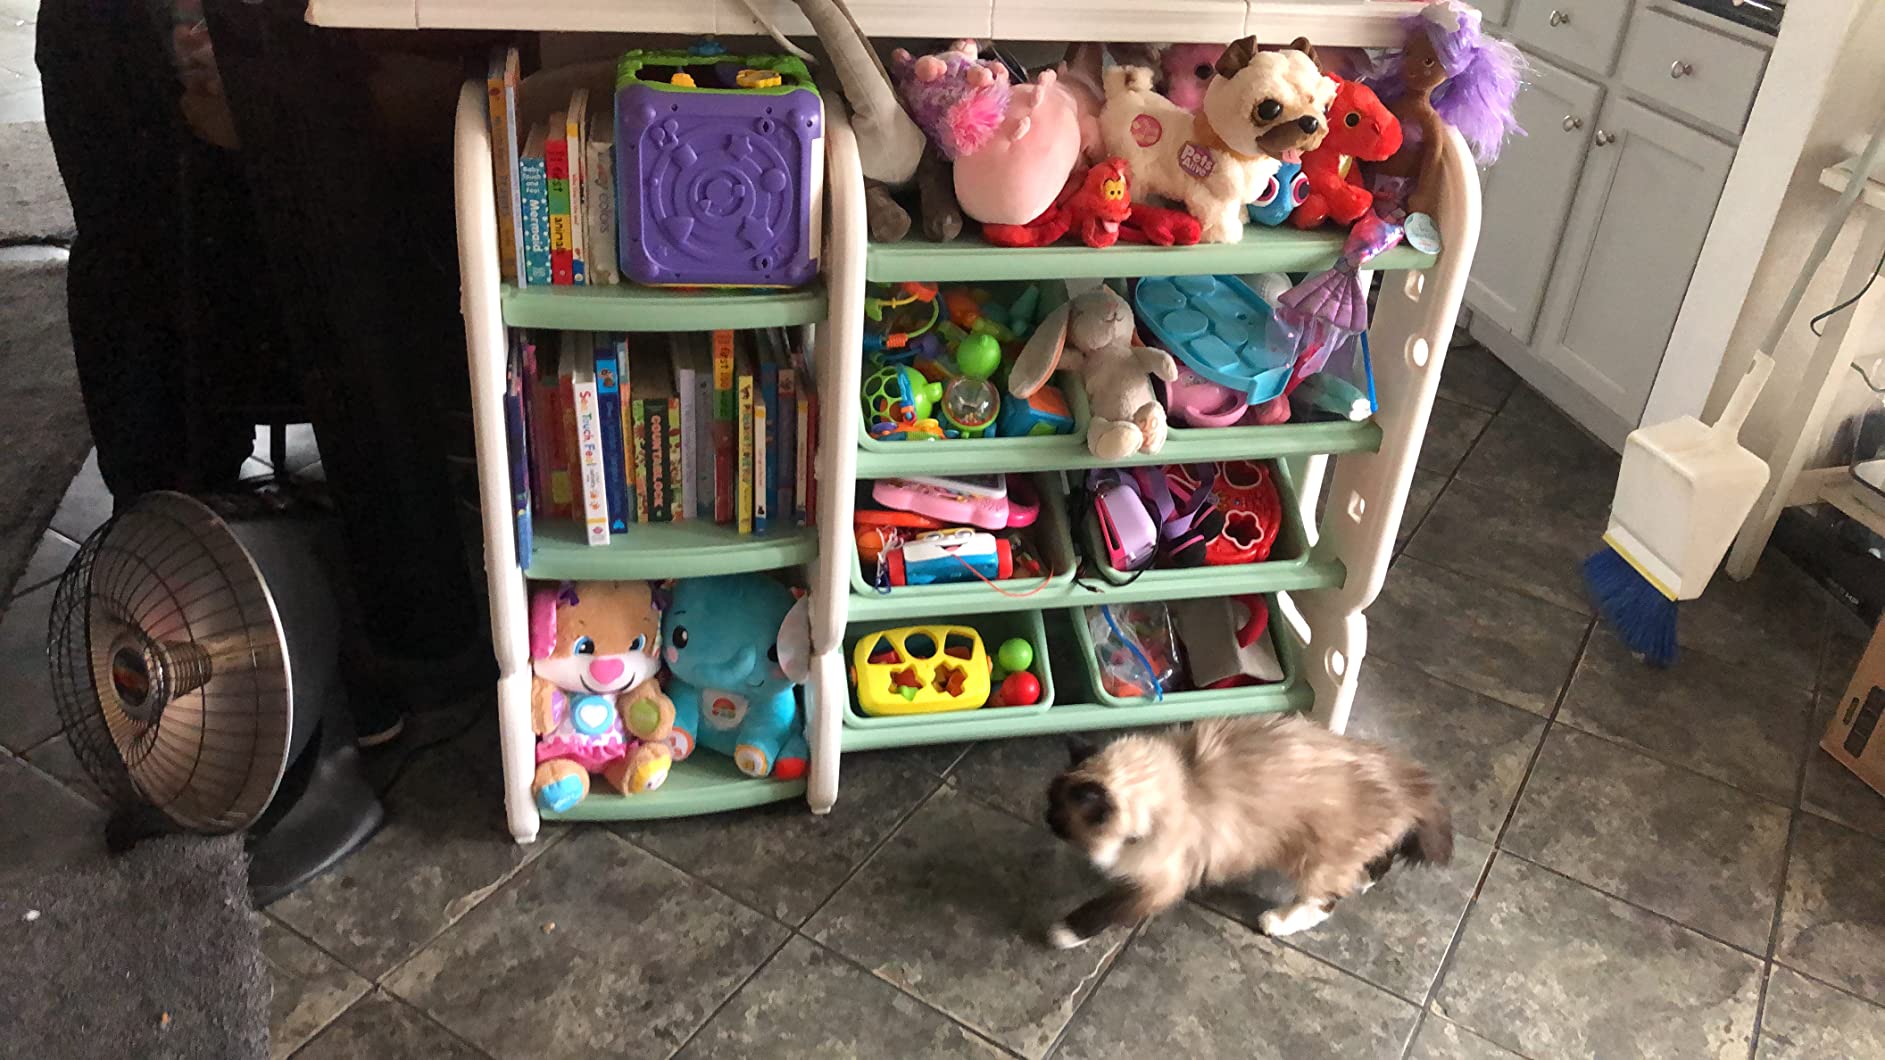  CAPHAUS Kids' Toy Storage Organizer, Open Storage Cubby,  Multifunctional Book and Toy Storage Cabinet, Book and Toy Storage Shelf  for Nursery, Playroom, Closet, Home Organization Toy Bookcase : Baby